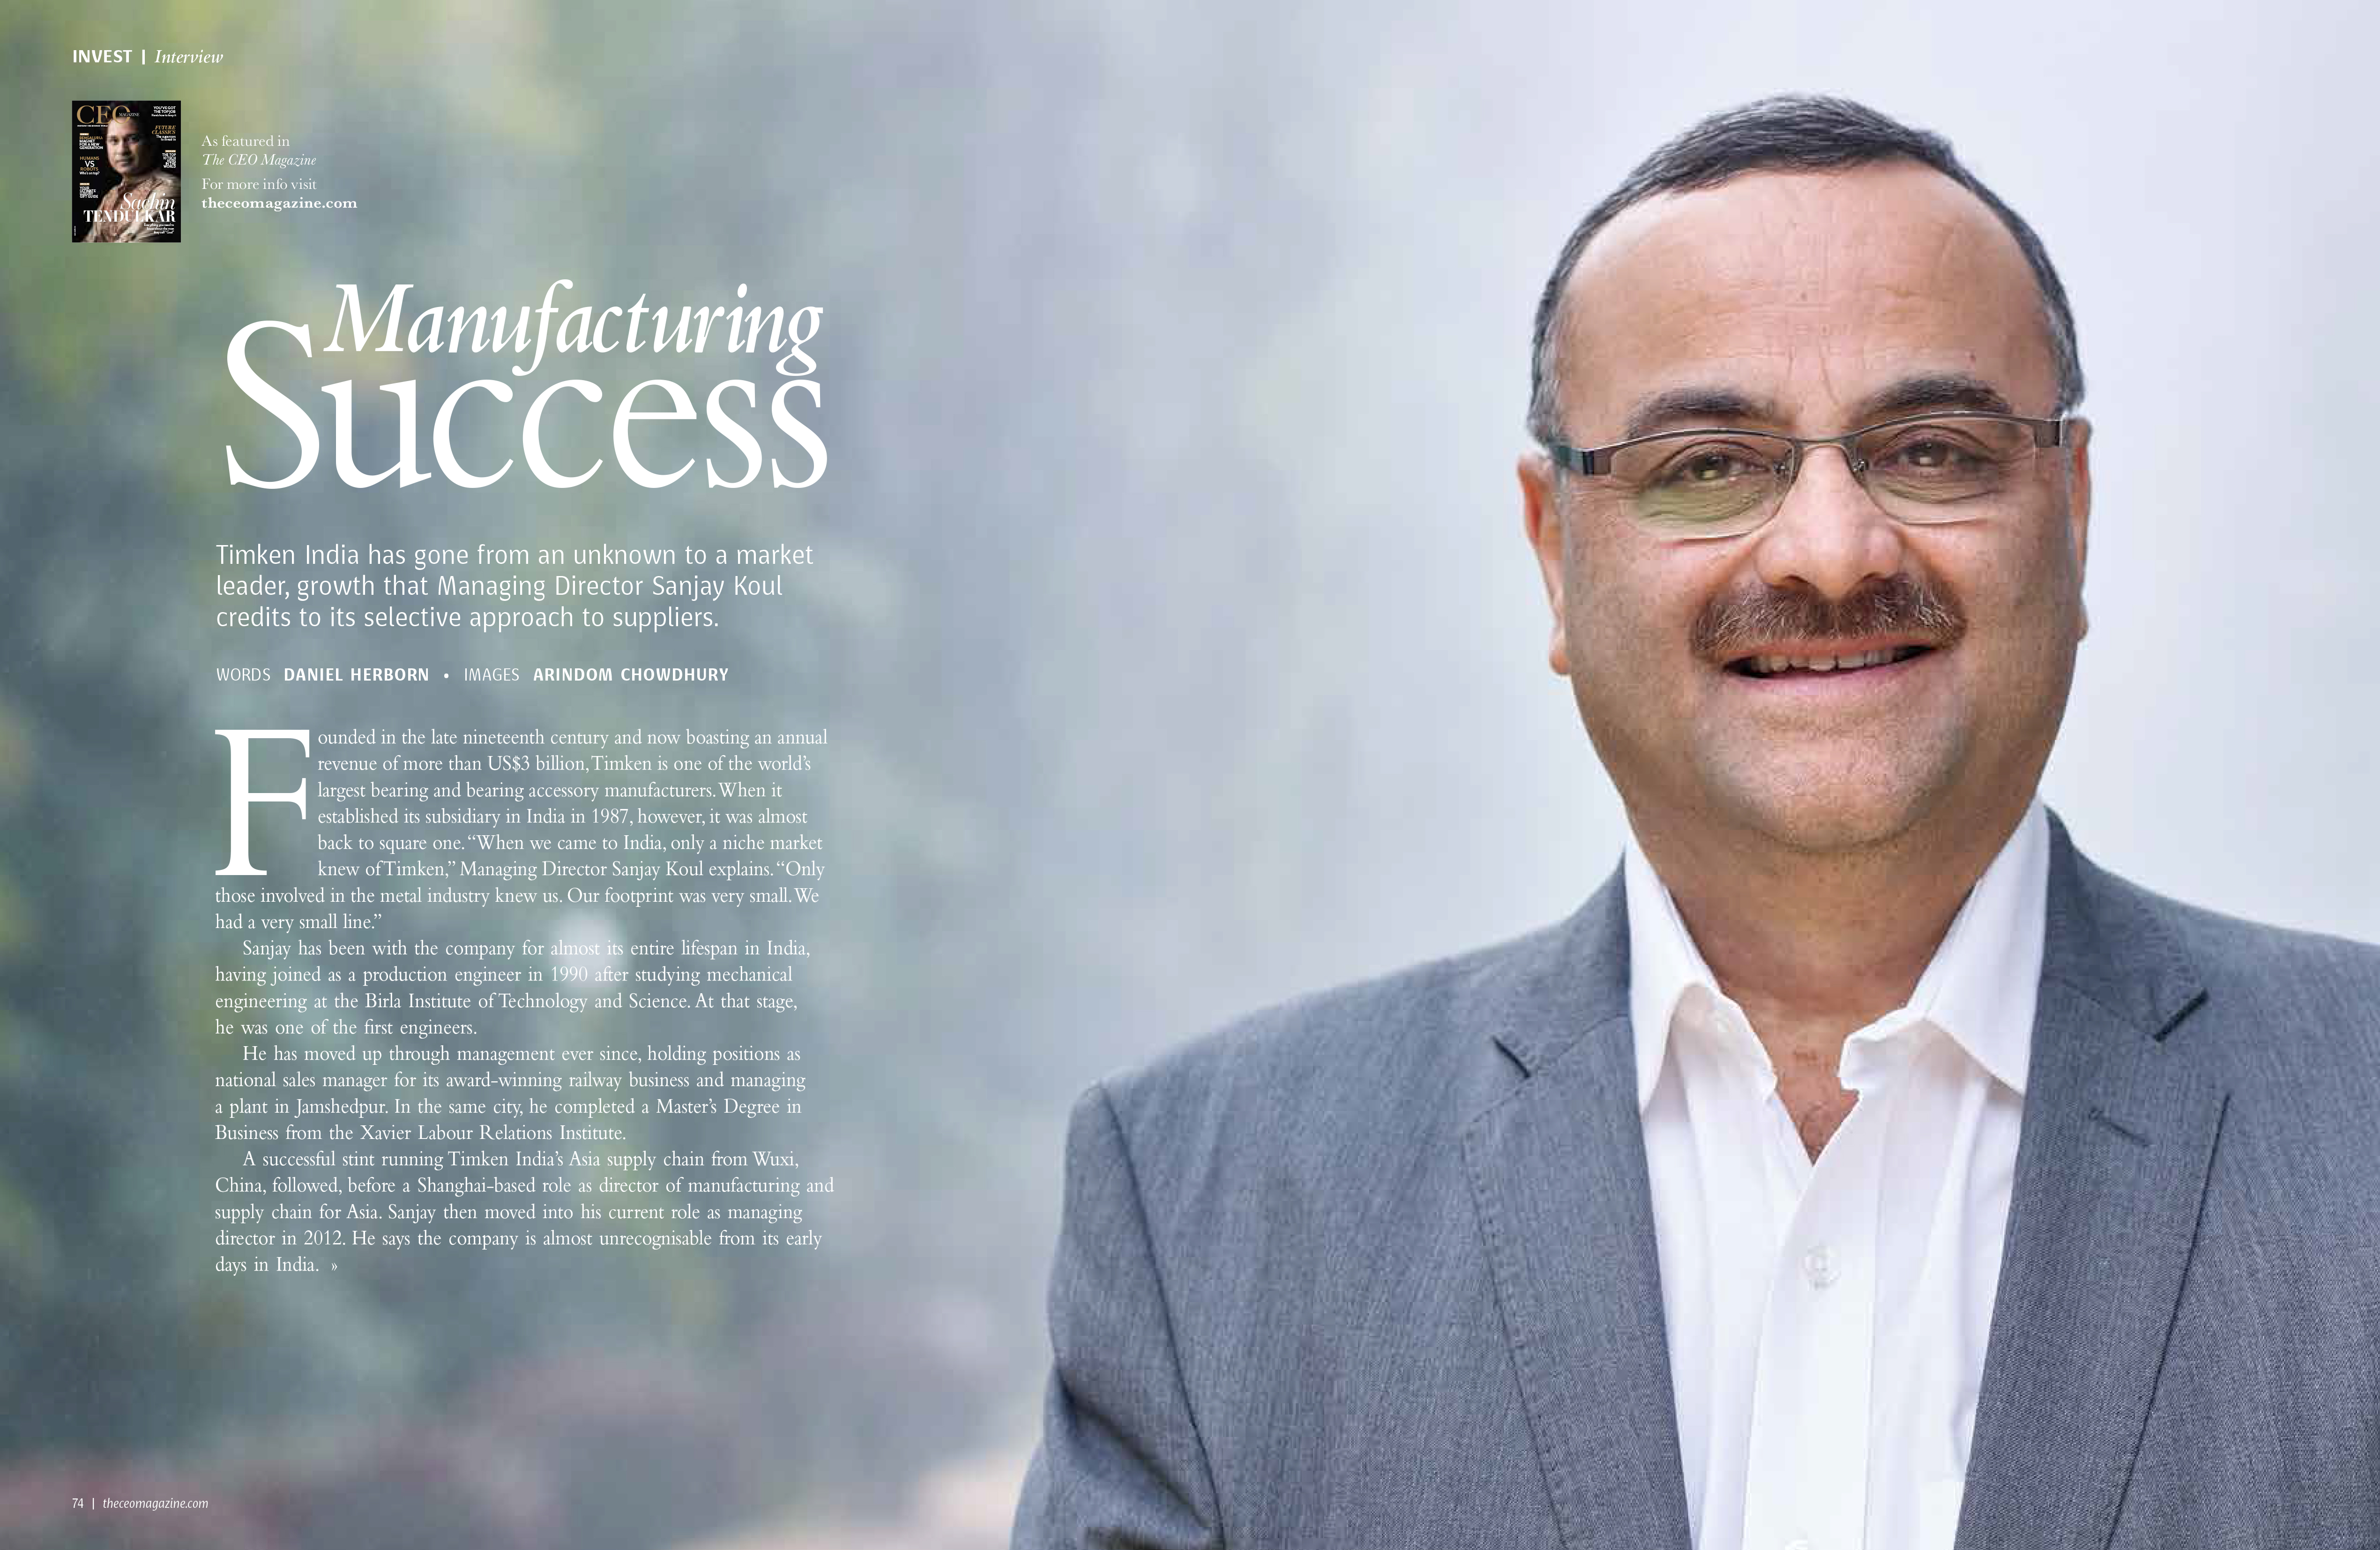 Sanjay Koul, Managing Director of Timken India